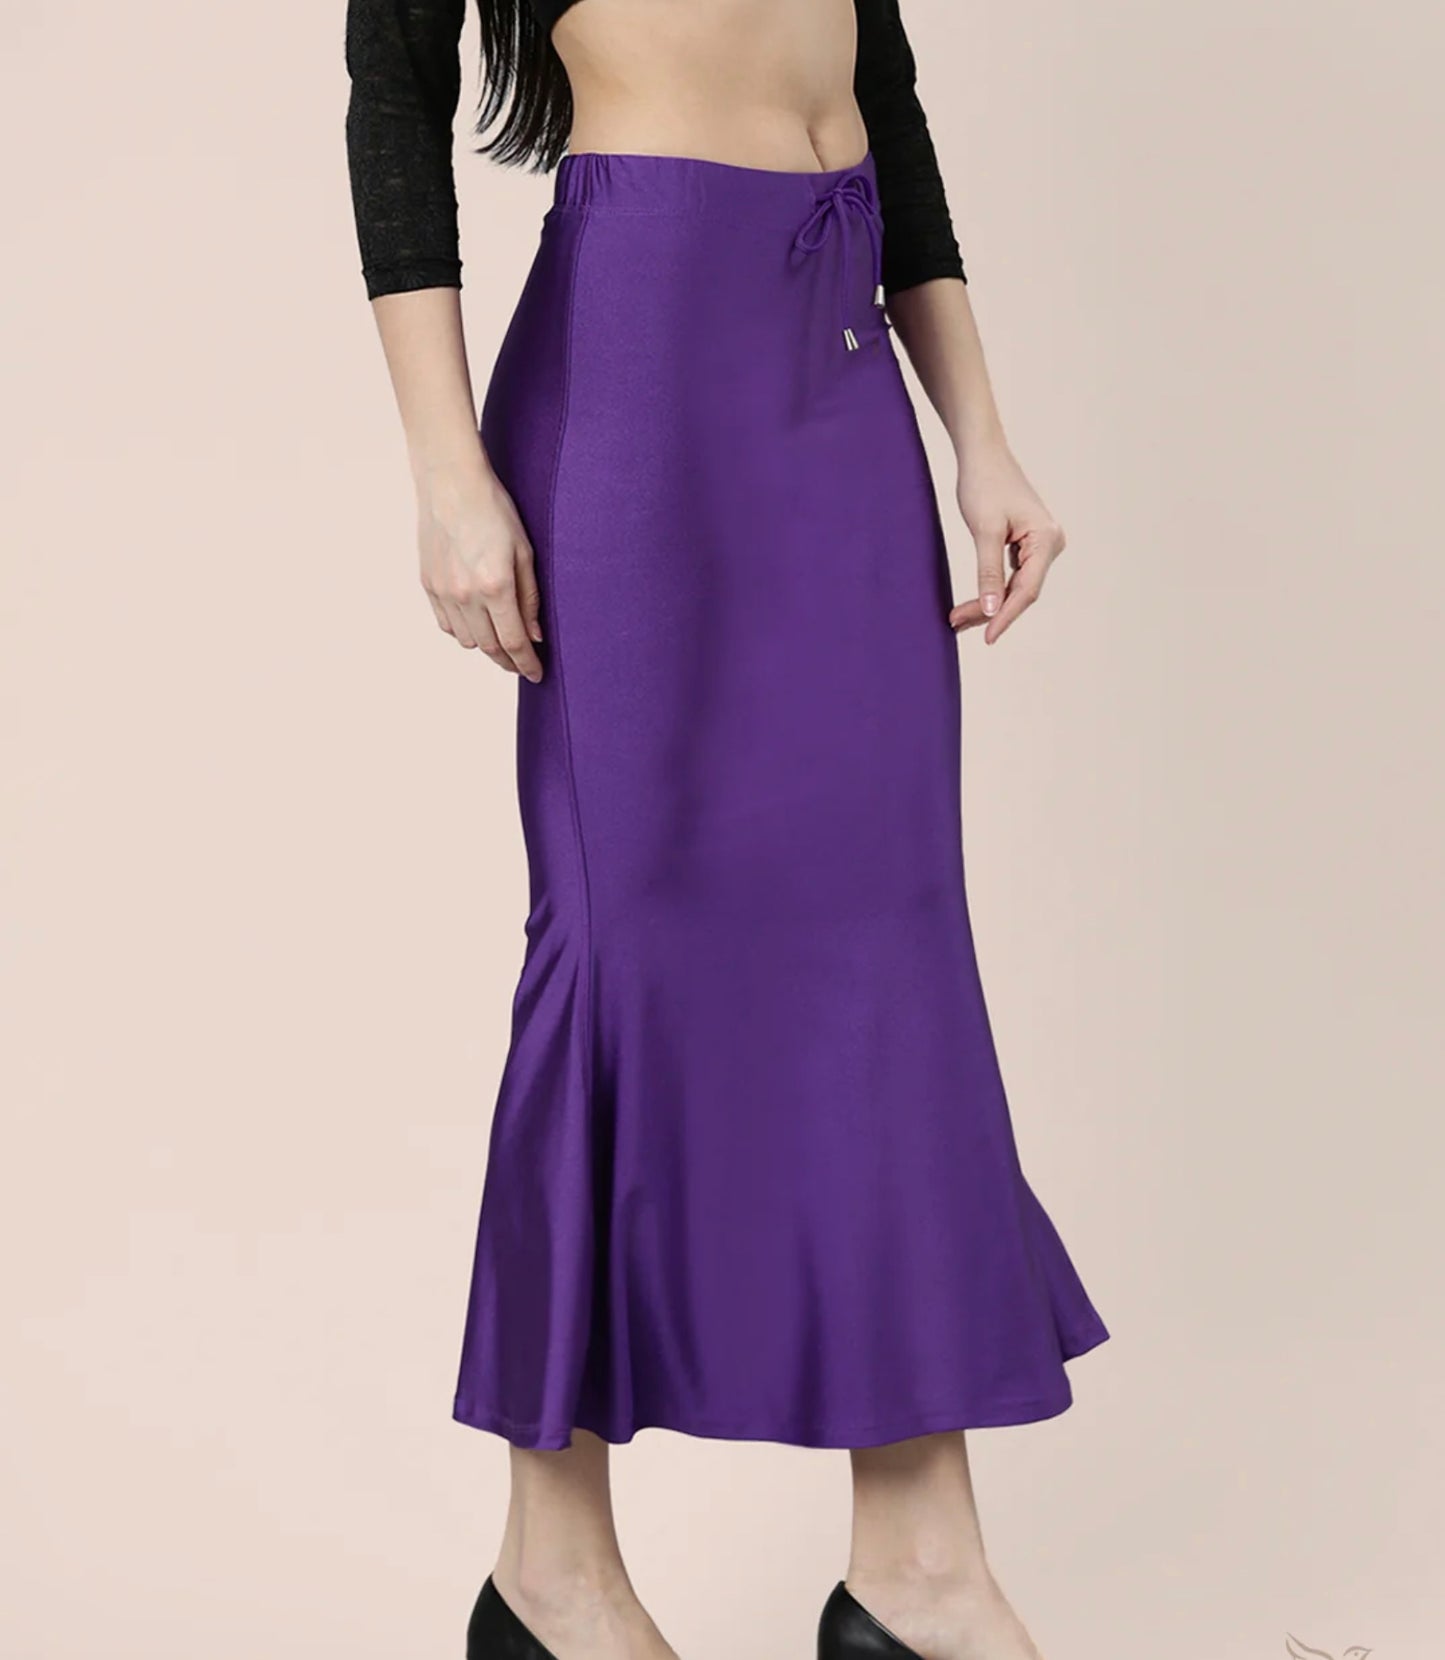 Electric Violet Shimmer/satin women saree shape wear